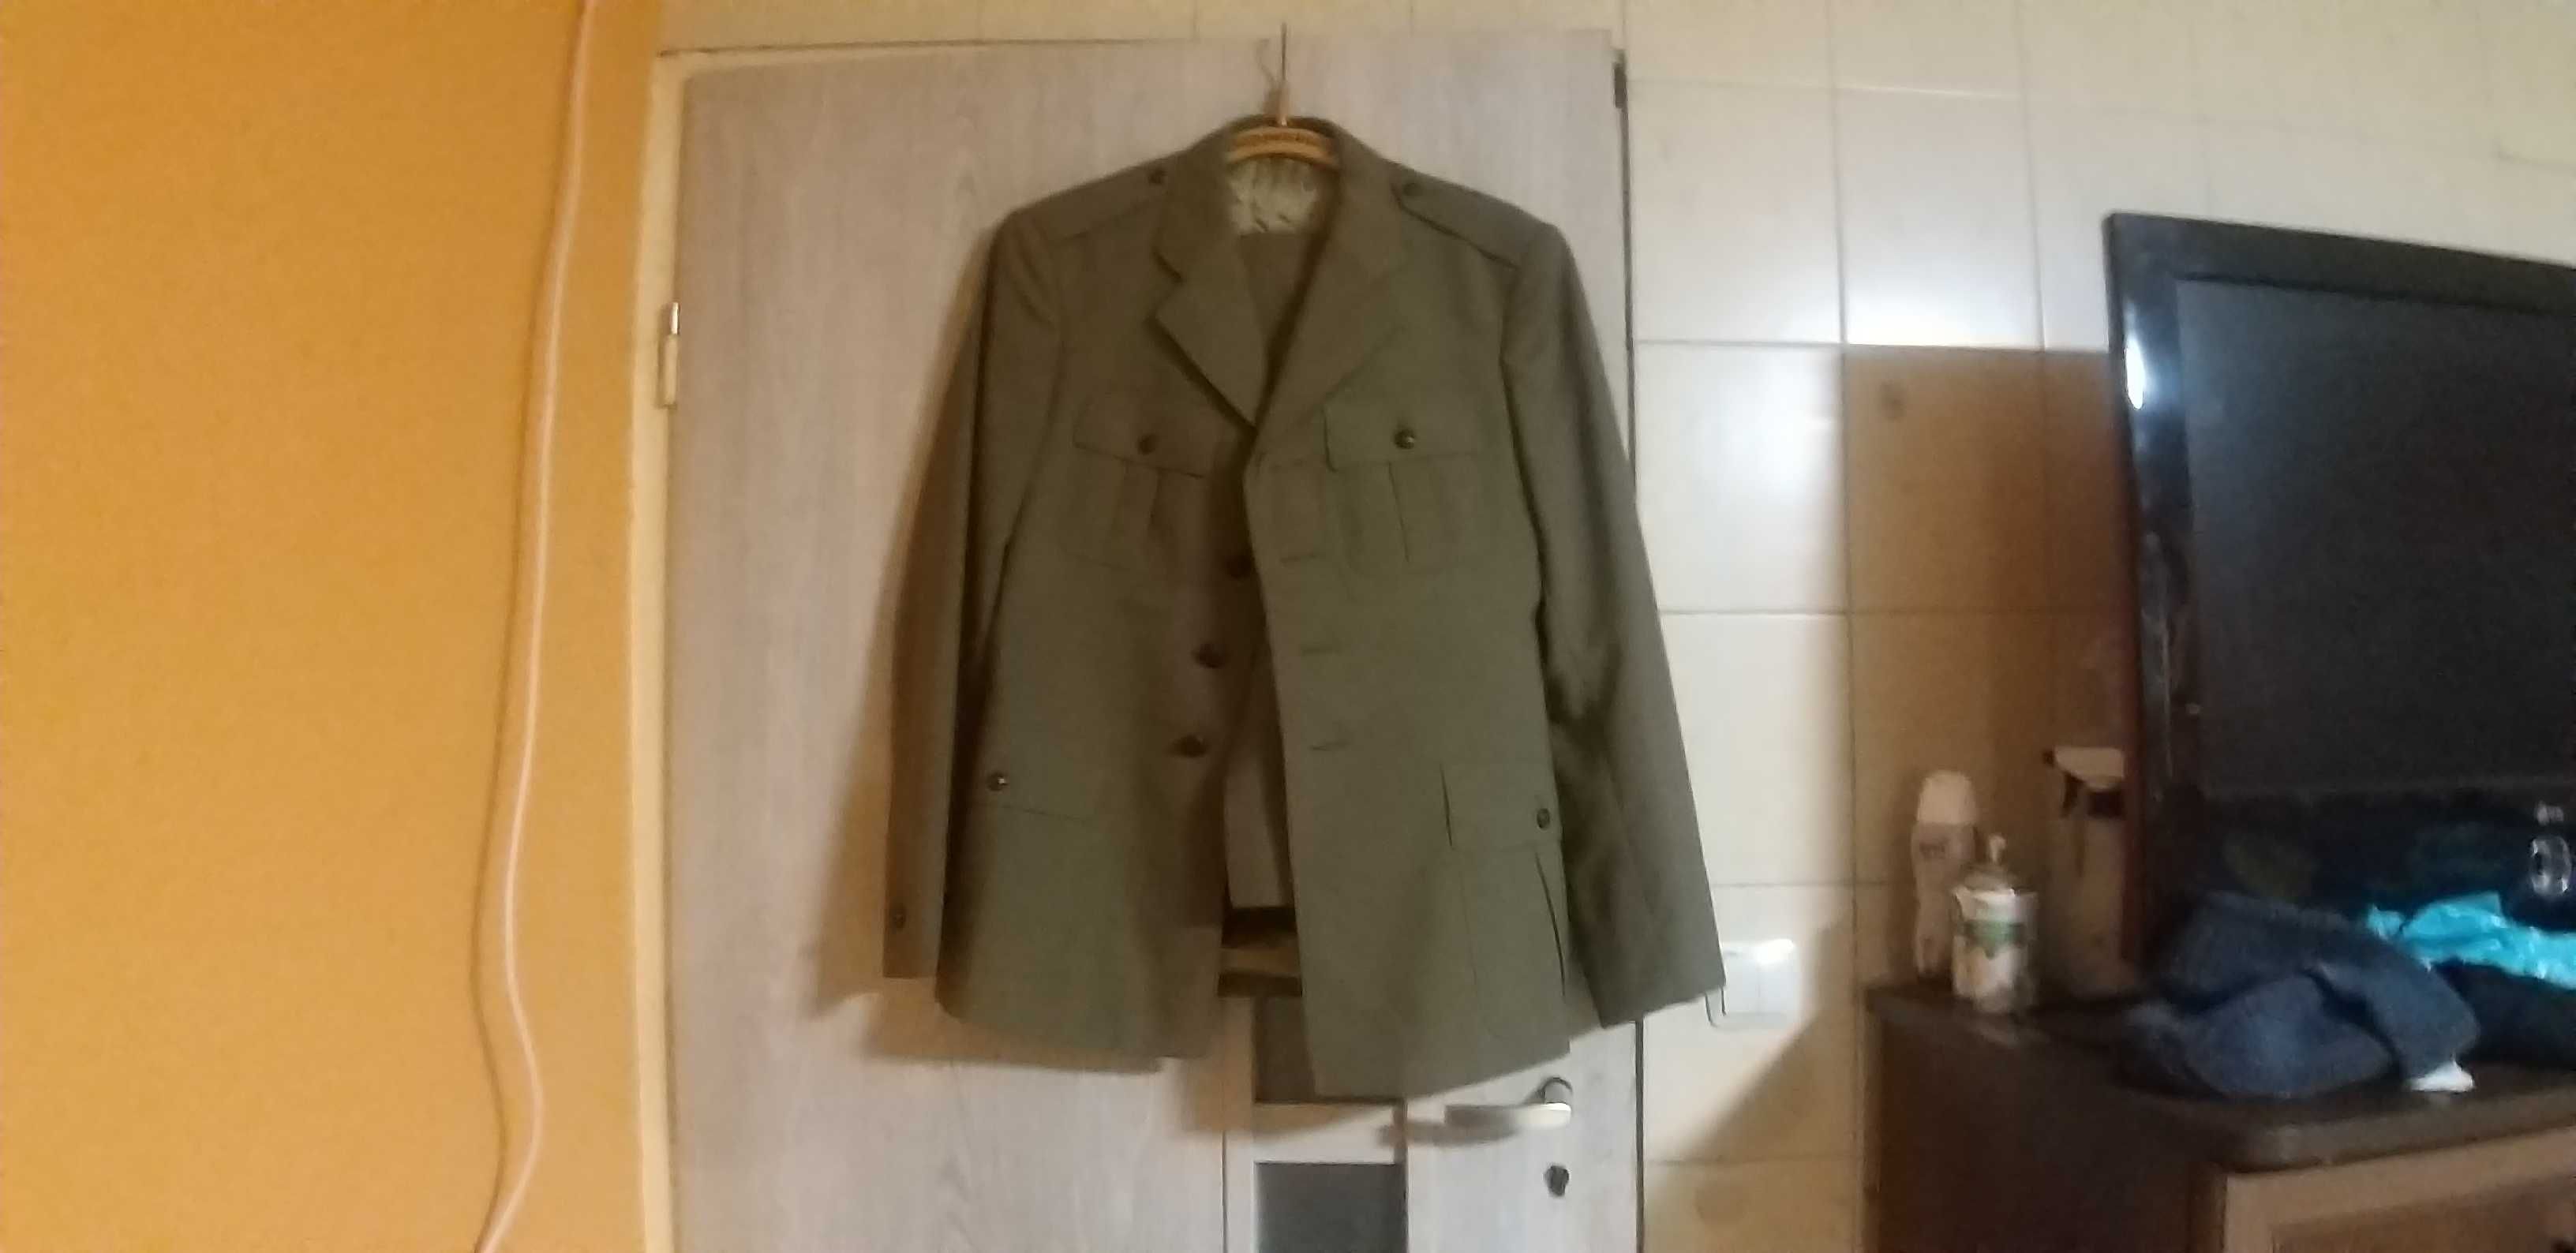 mundur wojskowy garnitur PRL idealny stan kolekcja militaria